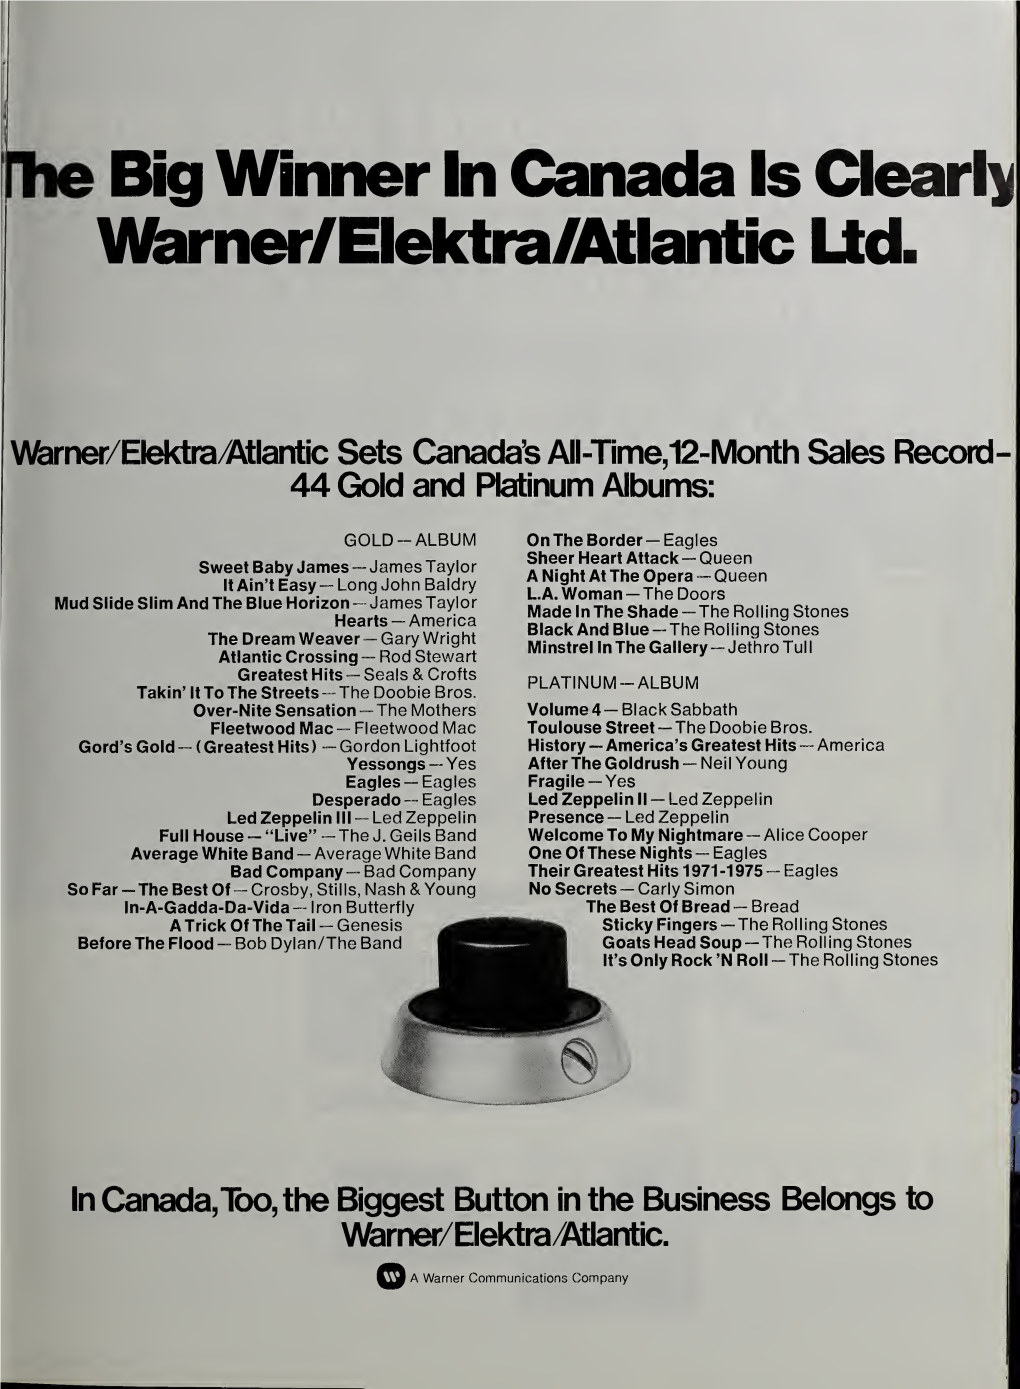 Rhe Big Winner in Canada Is Clearly Wamer/Elektra/Atlantic Ltd